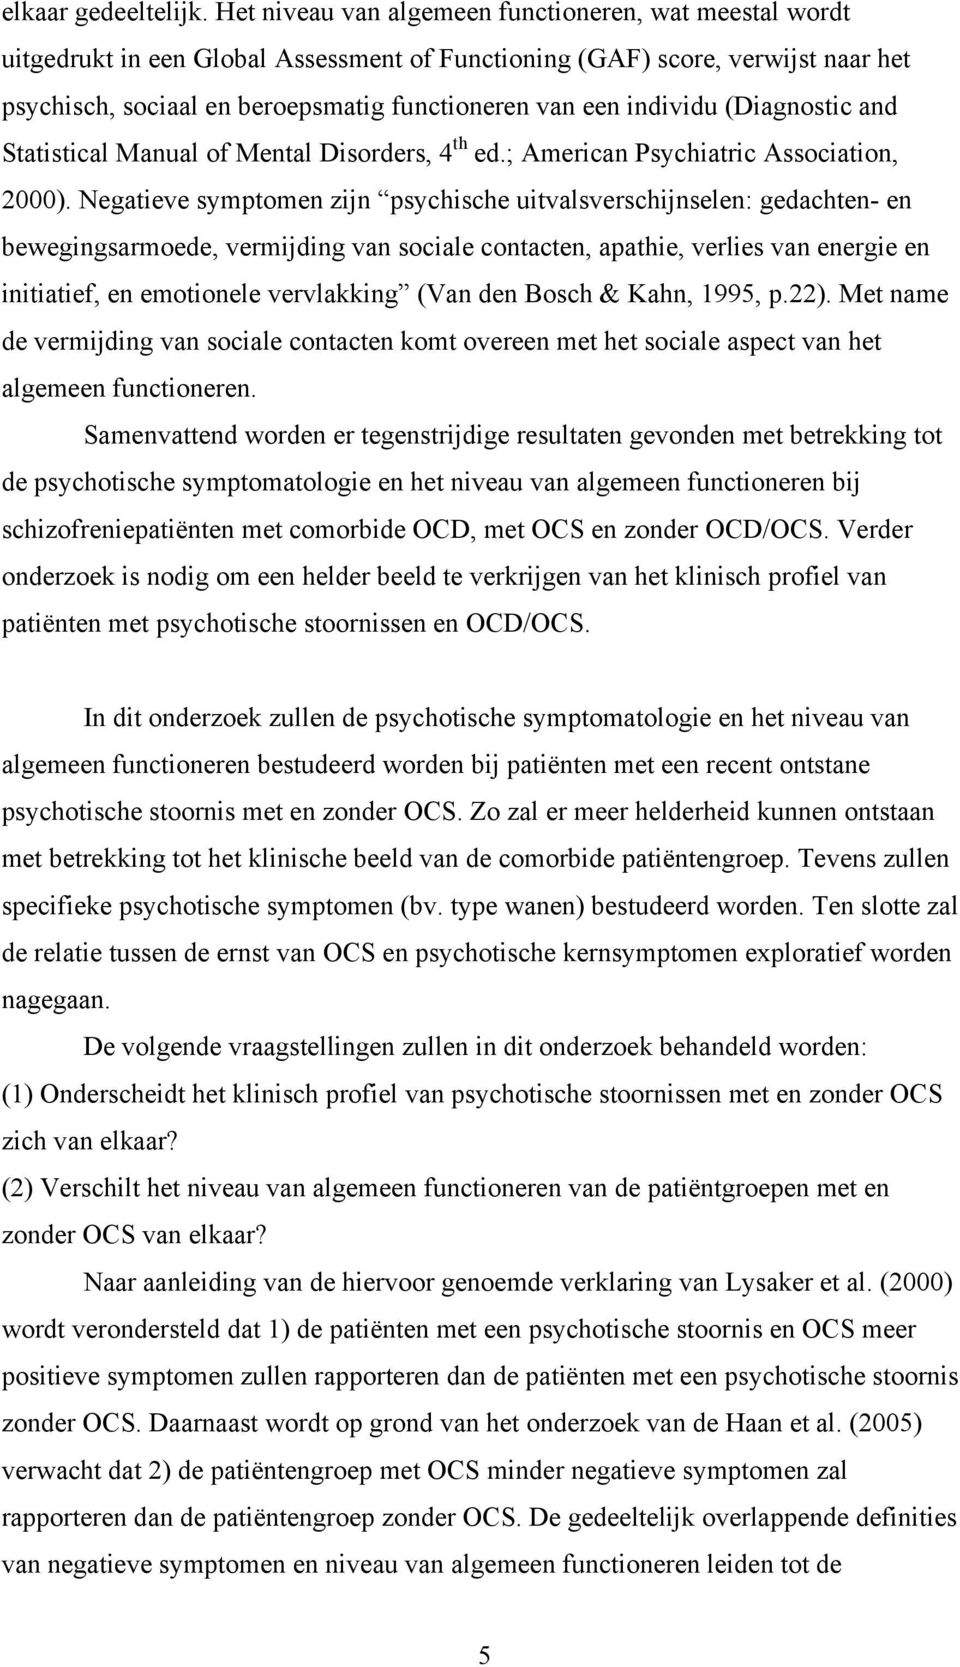 individu (Diagnostic and Statistical Manual of Mental Disorders, 4 th ed.; American Psychiatric Association, 2000).